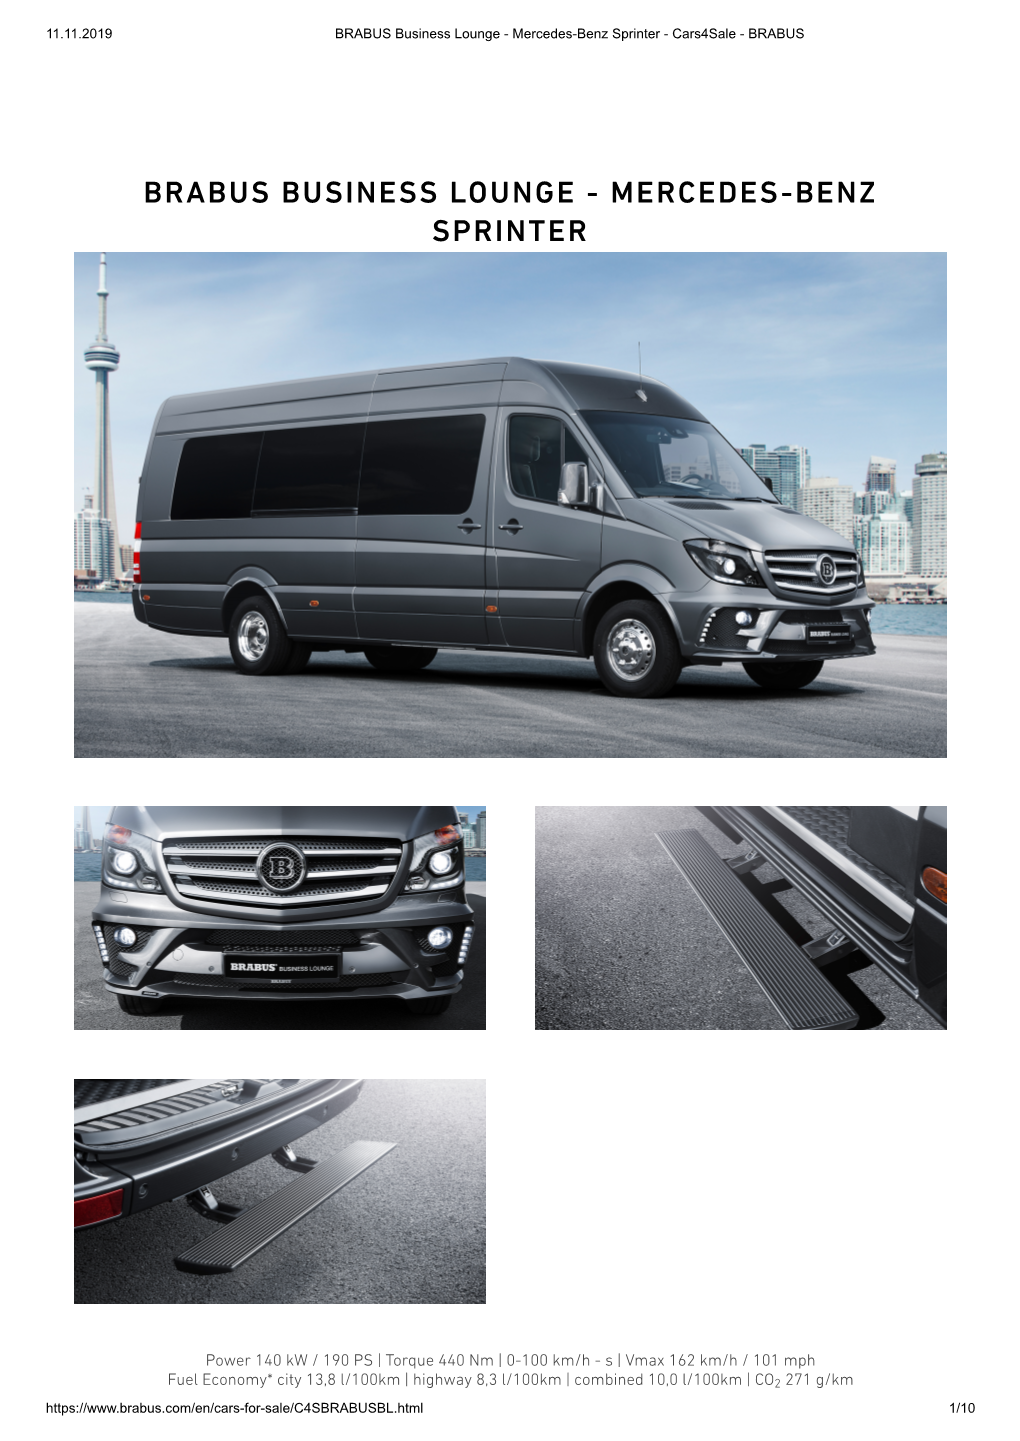 BRABUS Business Lounge - Mercedes-Benz Sprinter - Cars4sale - BRABUS